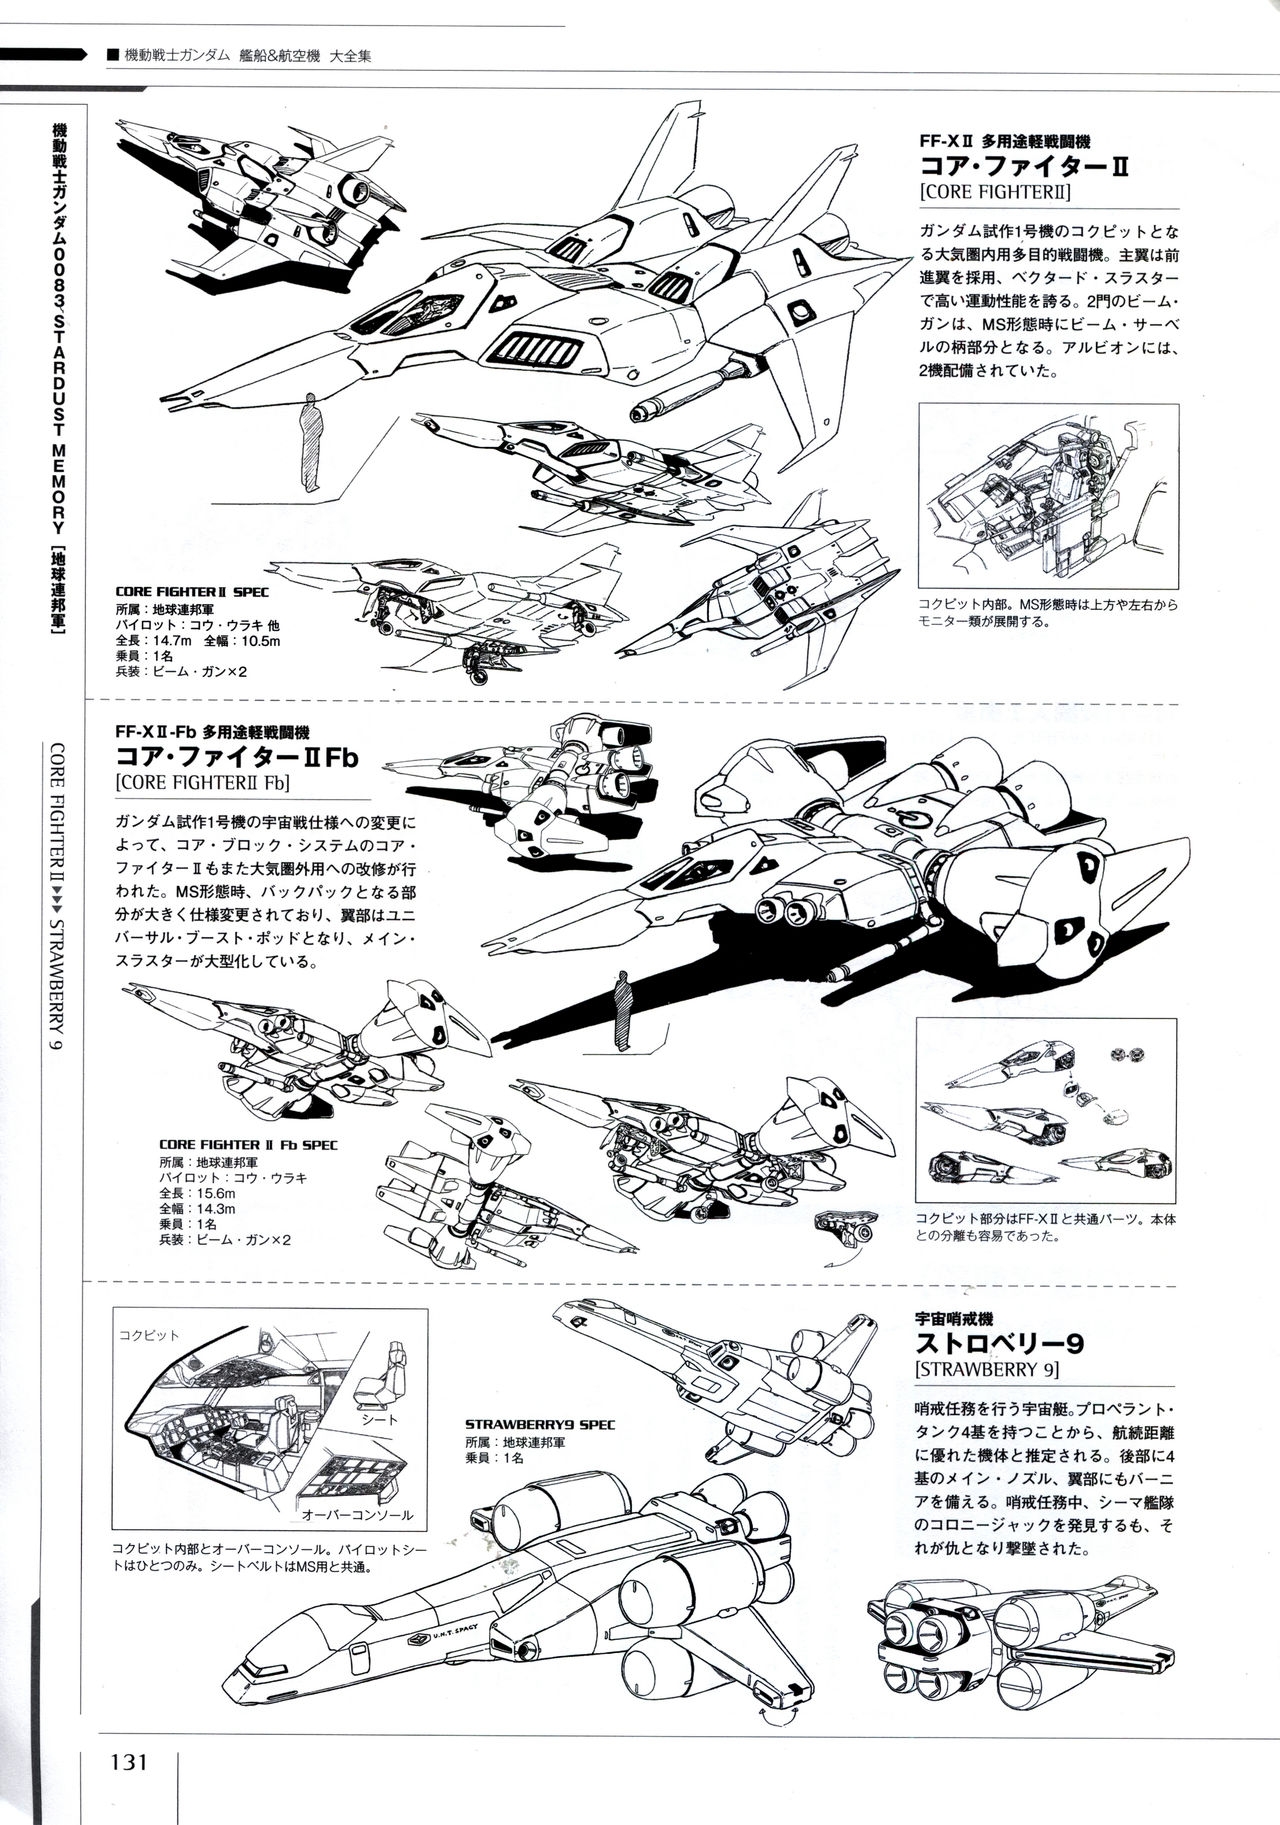 Mobile Suit Gundam - Ship & Aerospace Plane Encyclopedia - Revised Edition 136